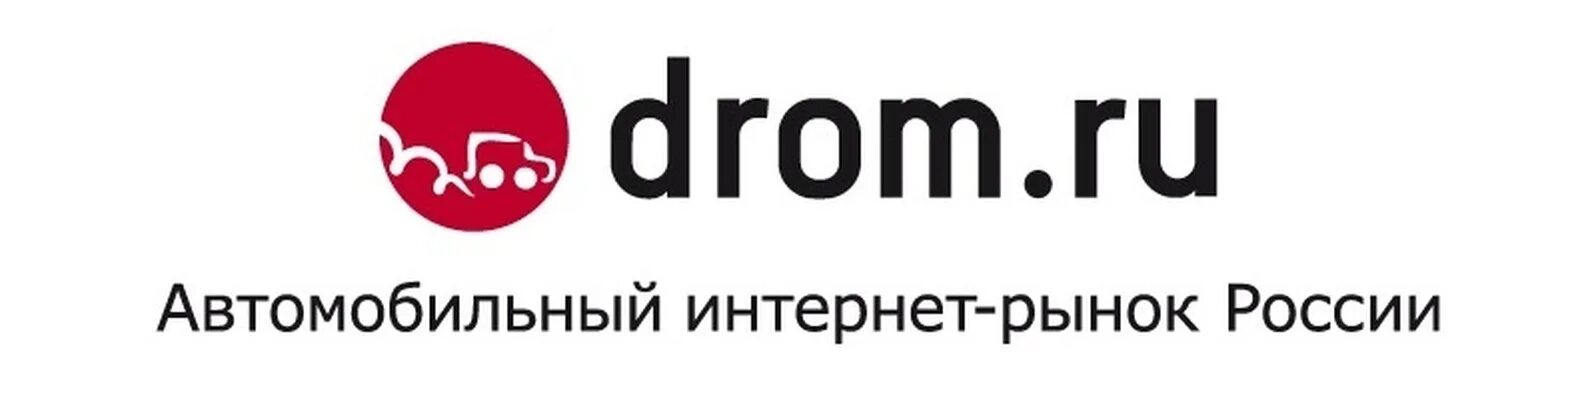 Дром ру 3. Дром ру. Drom.ru логотип. Дром картинки. Логотип дром логотип.